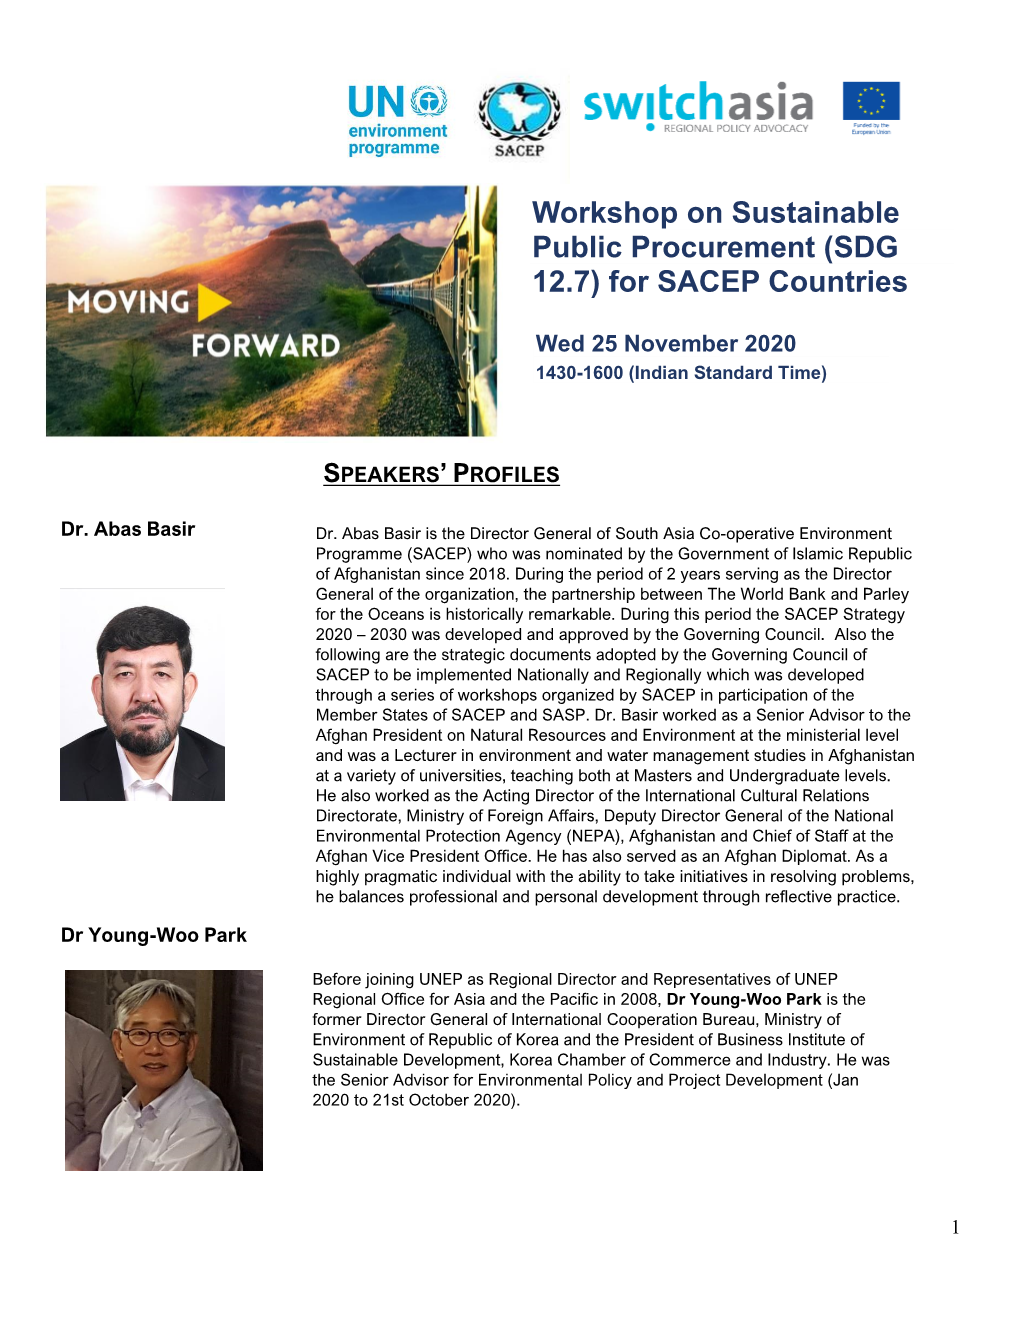 Workshop on Sustainable Public Procurement (SDG 12.7) for SACEP Countries